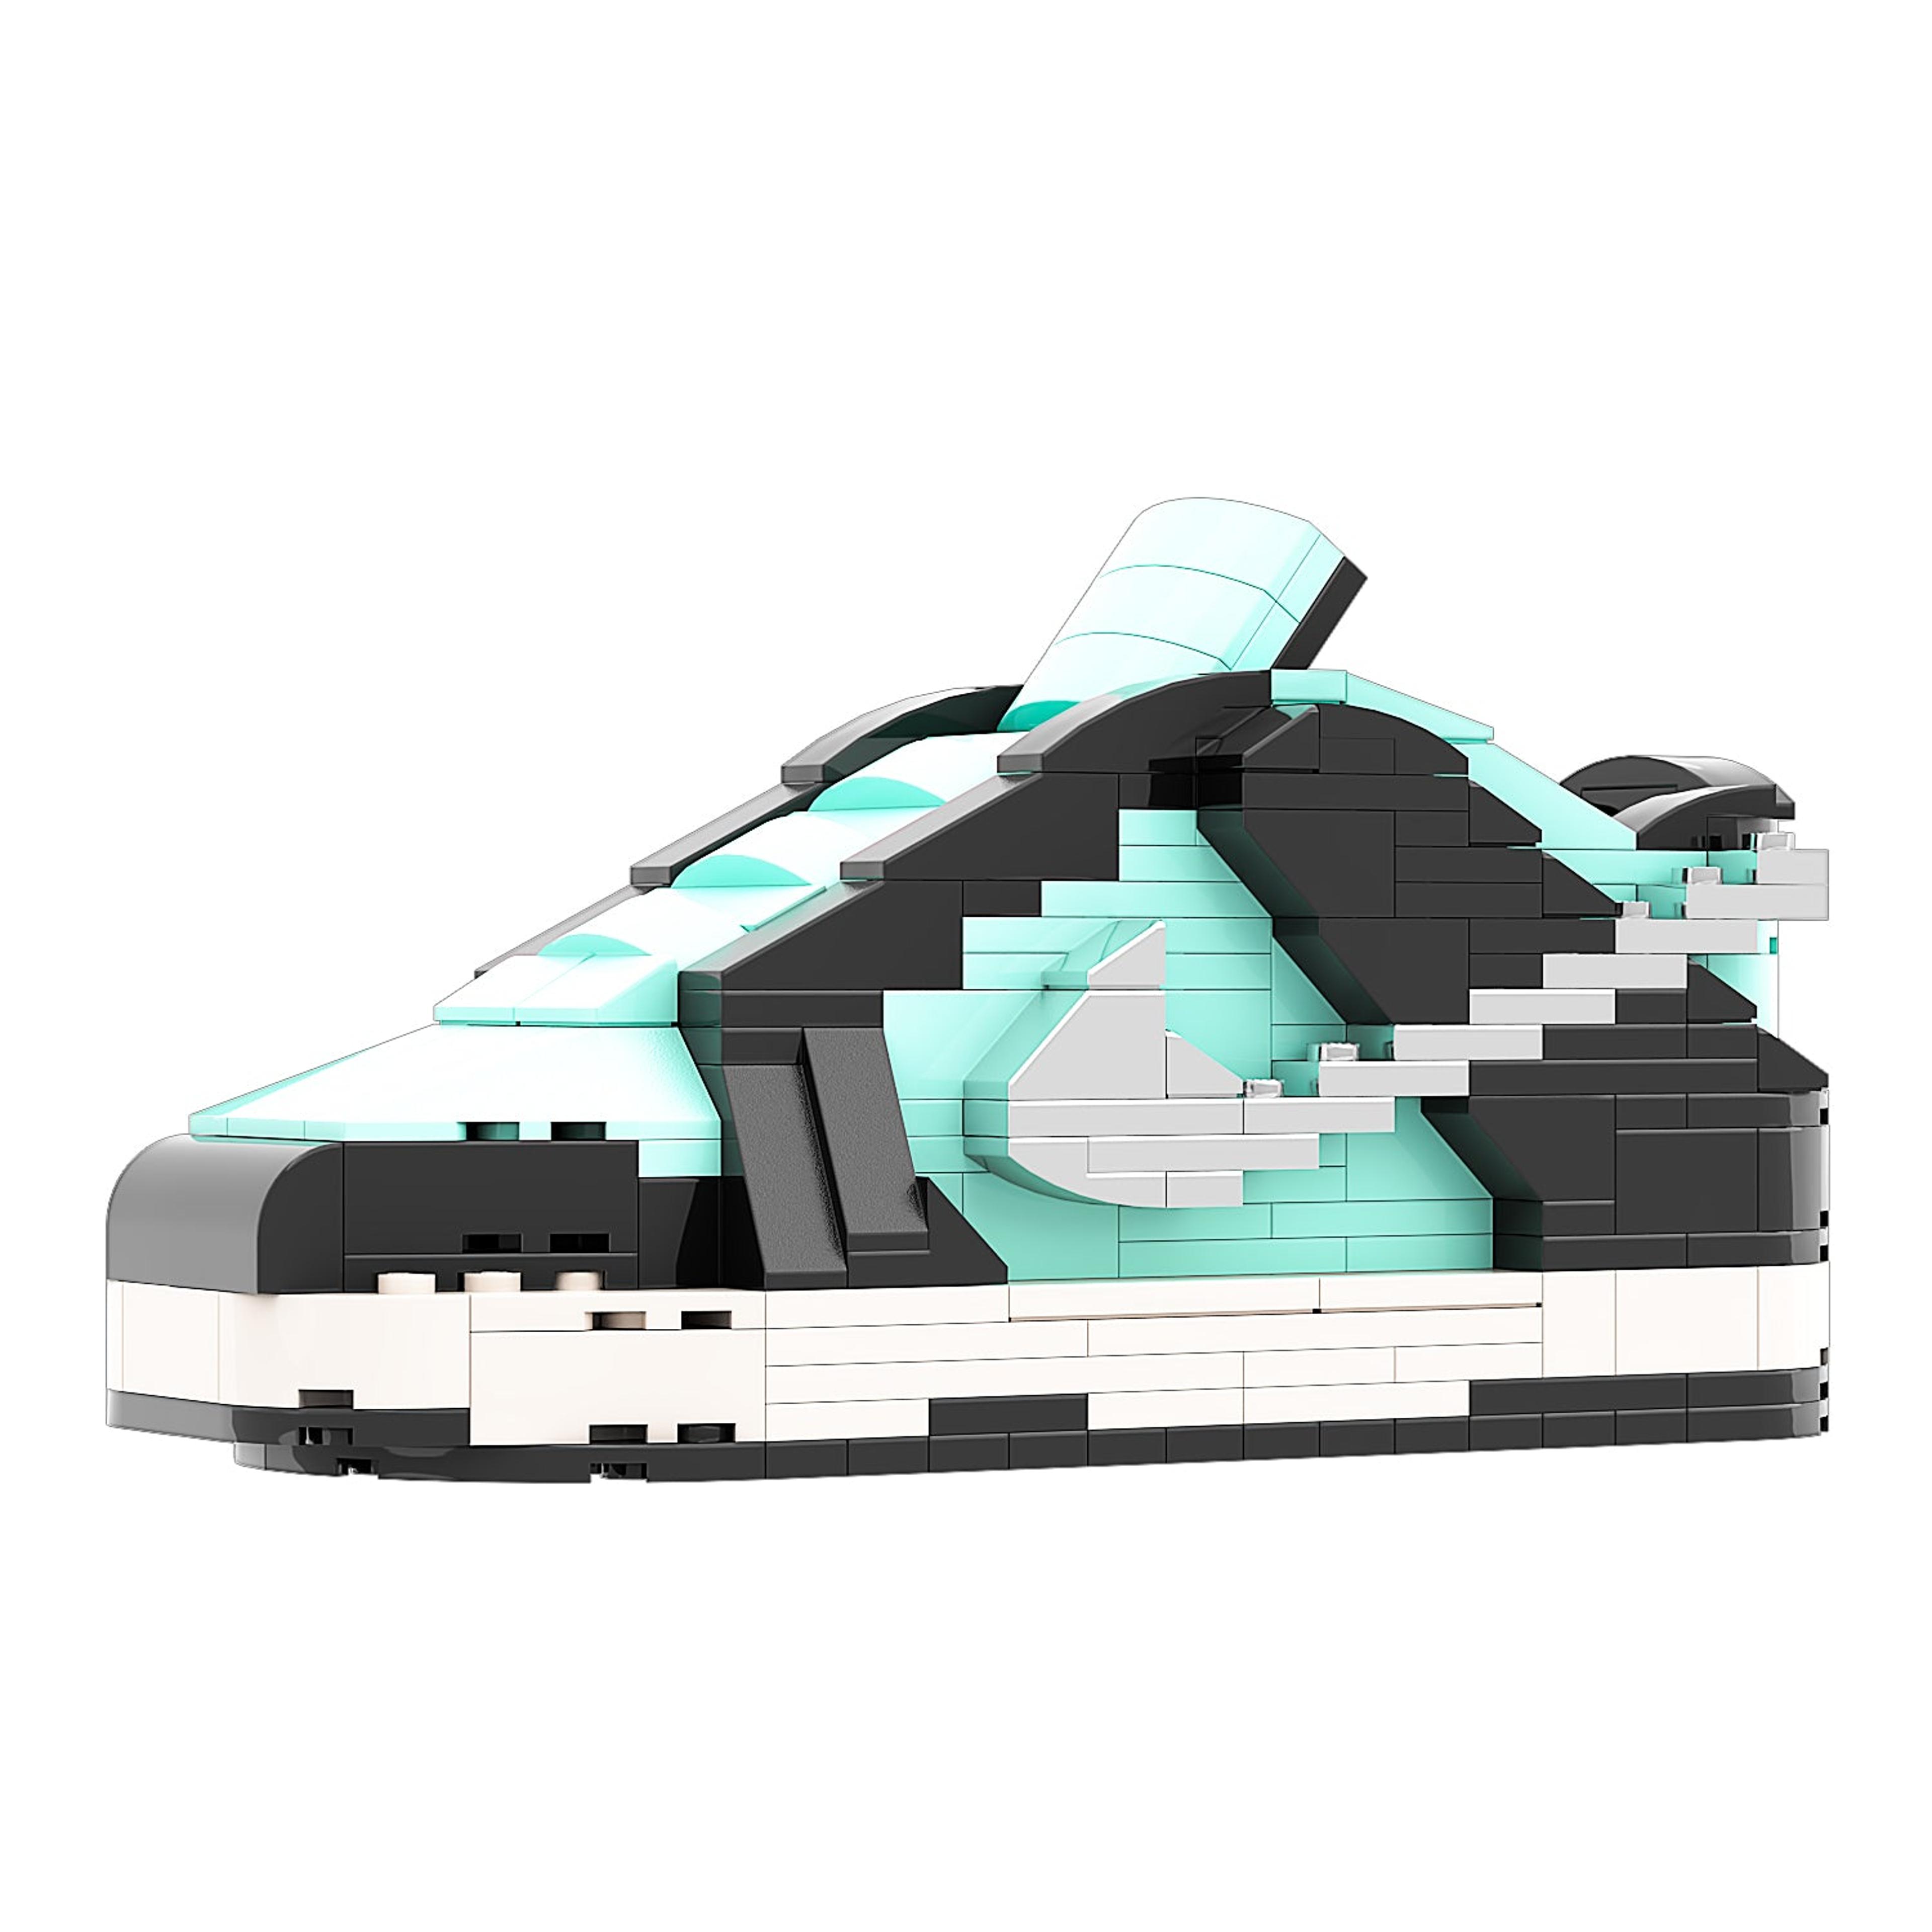 REGULAR SB Dunk "Diamond Low" Sneaker Bricks with Mini Figure